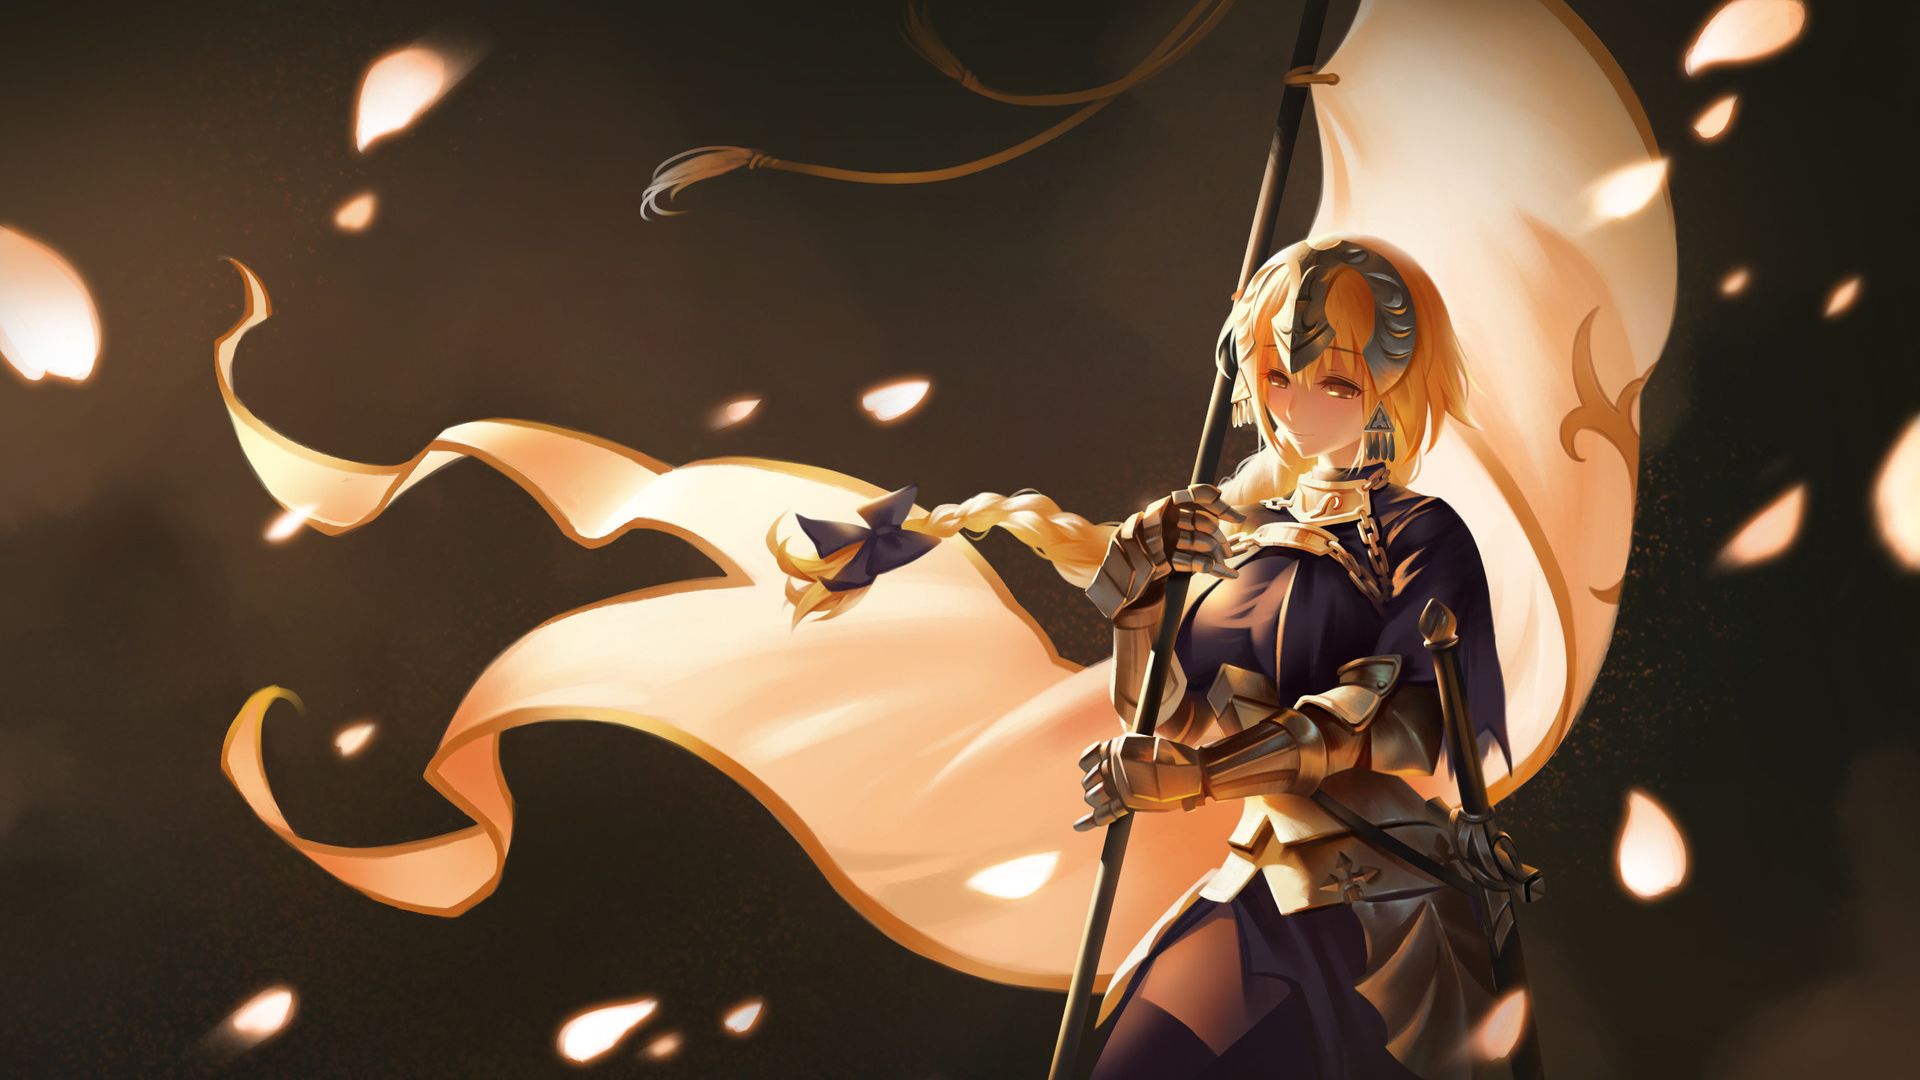 Wallpaper Banner, anime girl, Jeanne d'arc, fate series